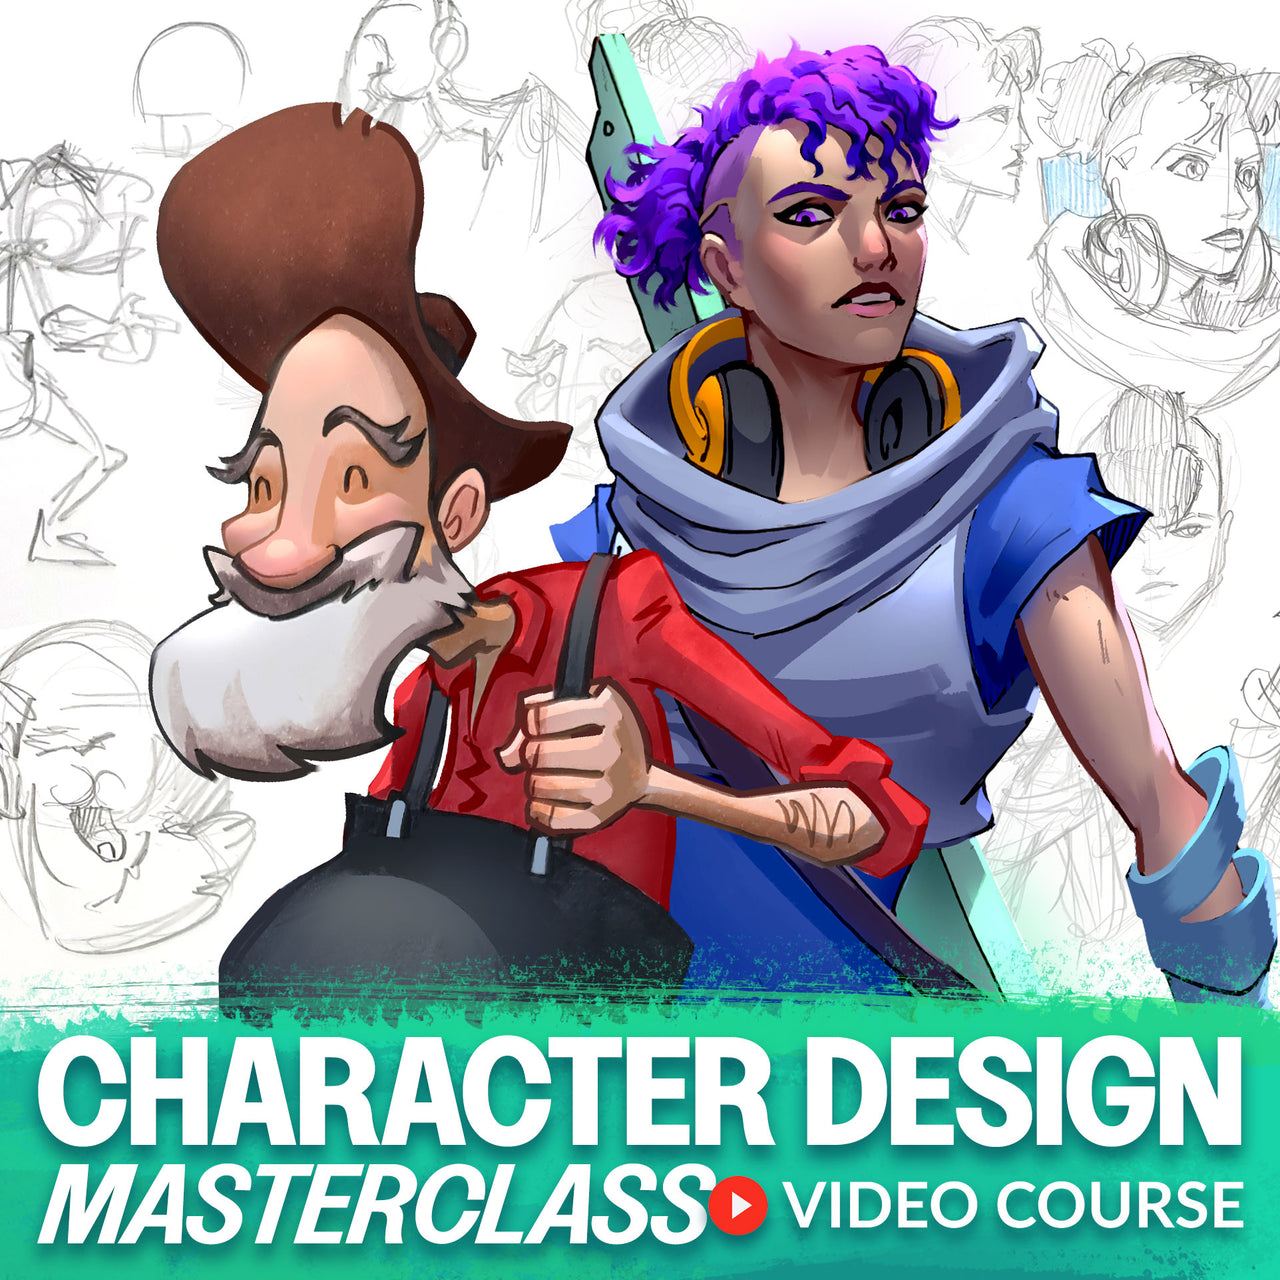 Jazza's Character Design Masterclass